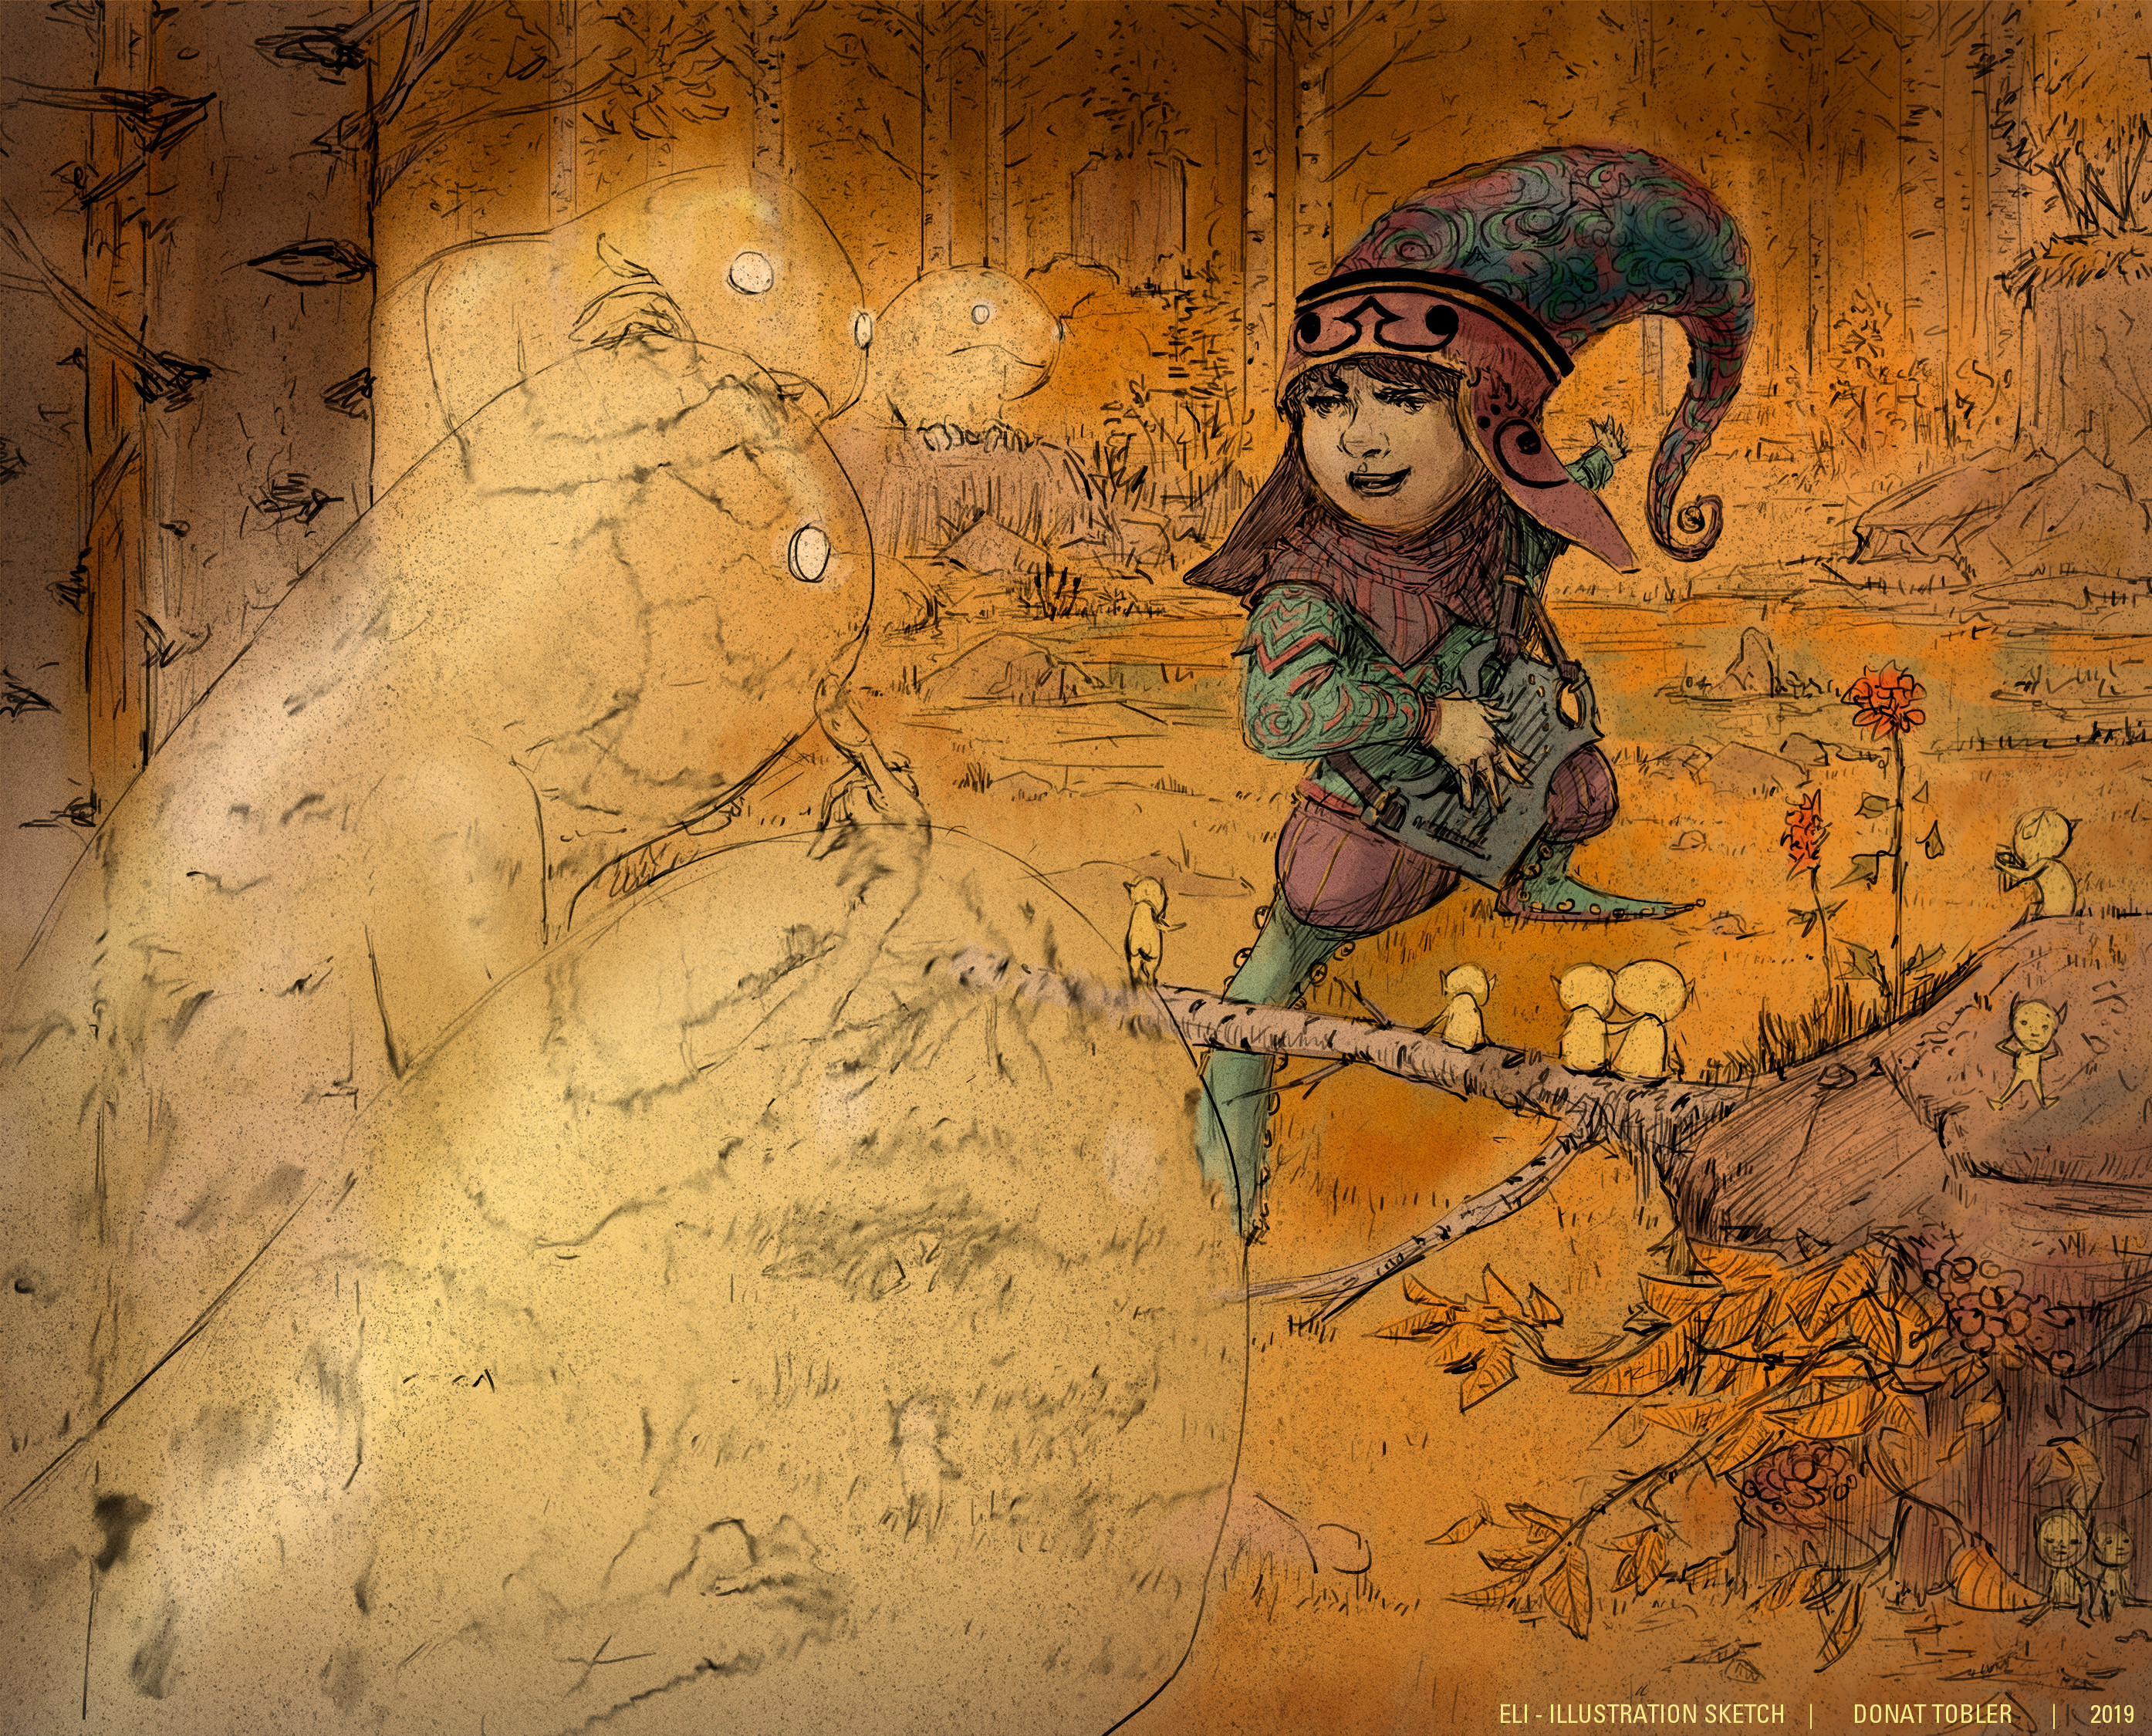 Illustration Sketch: Eli talking to the birch spirits